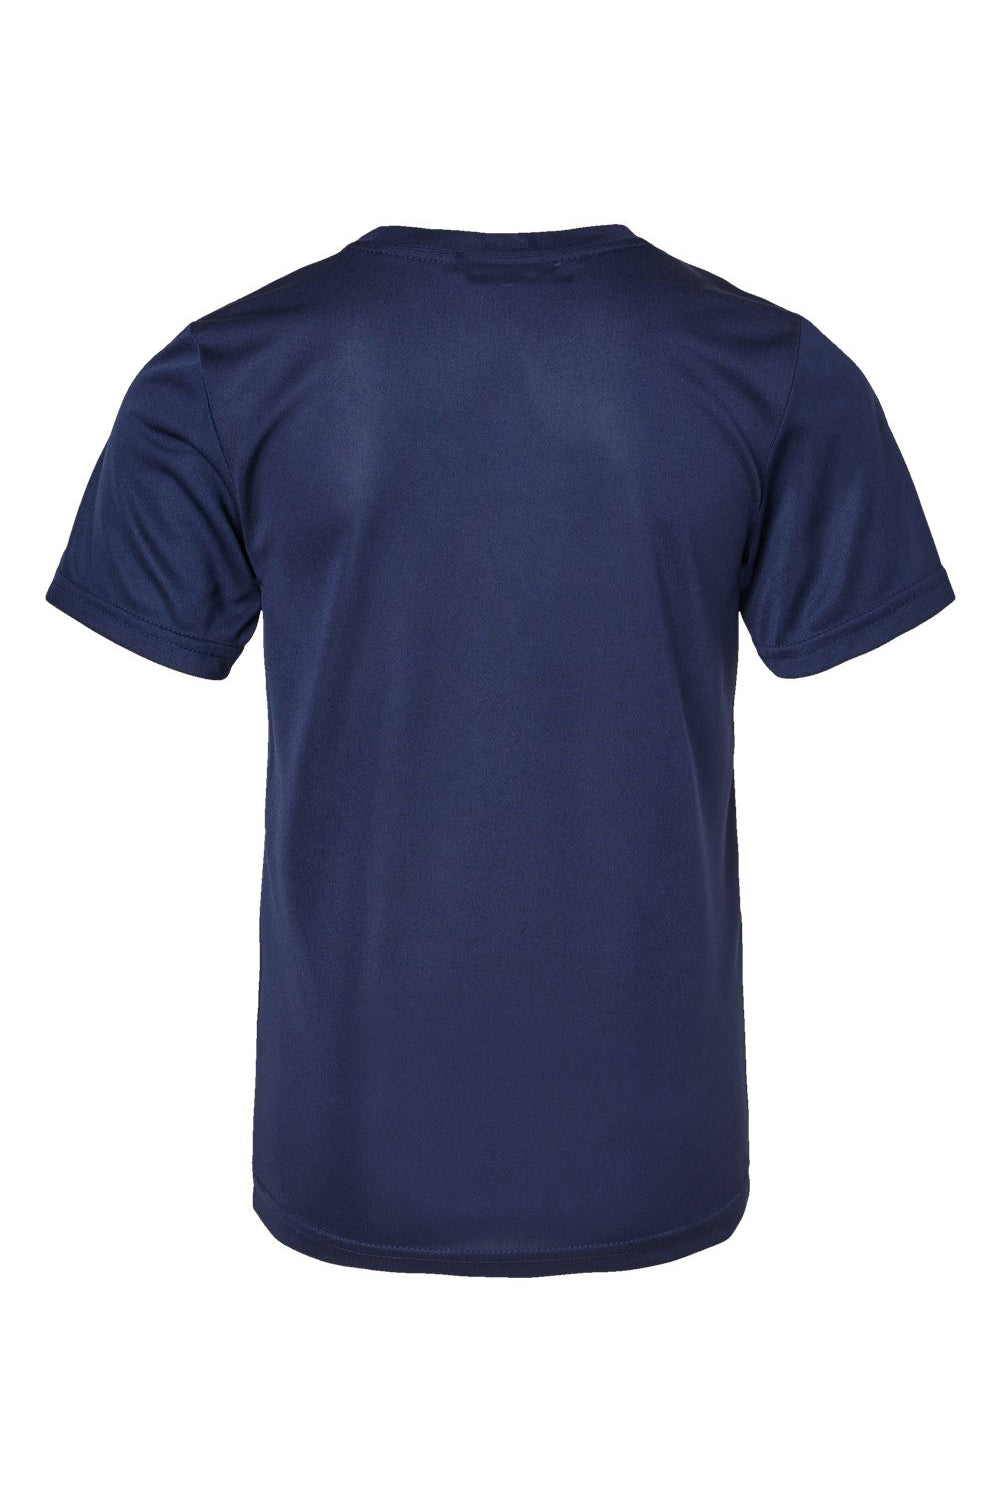 Augusta Sportswear 791 Youth Nexgen Moisture Wicking Short Sleeve Crewneck T-Shirt Navy Blue Flat Back